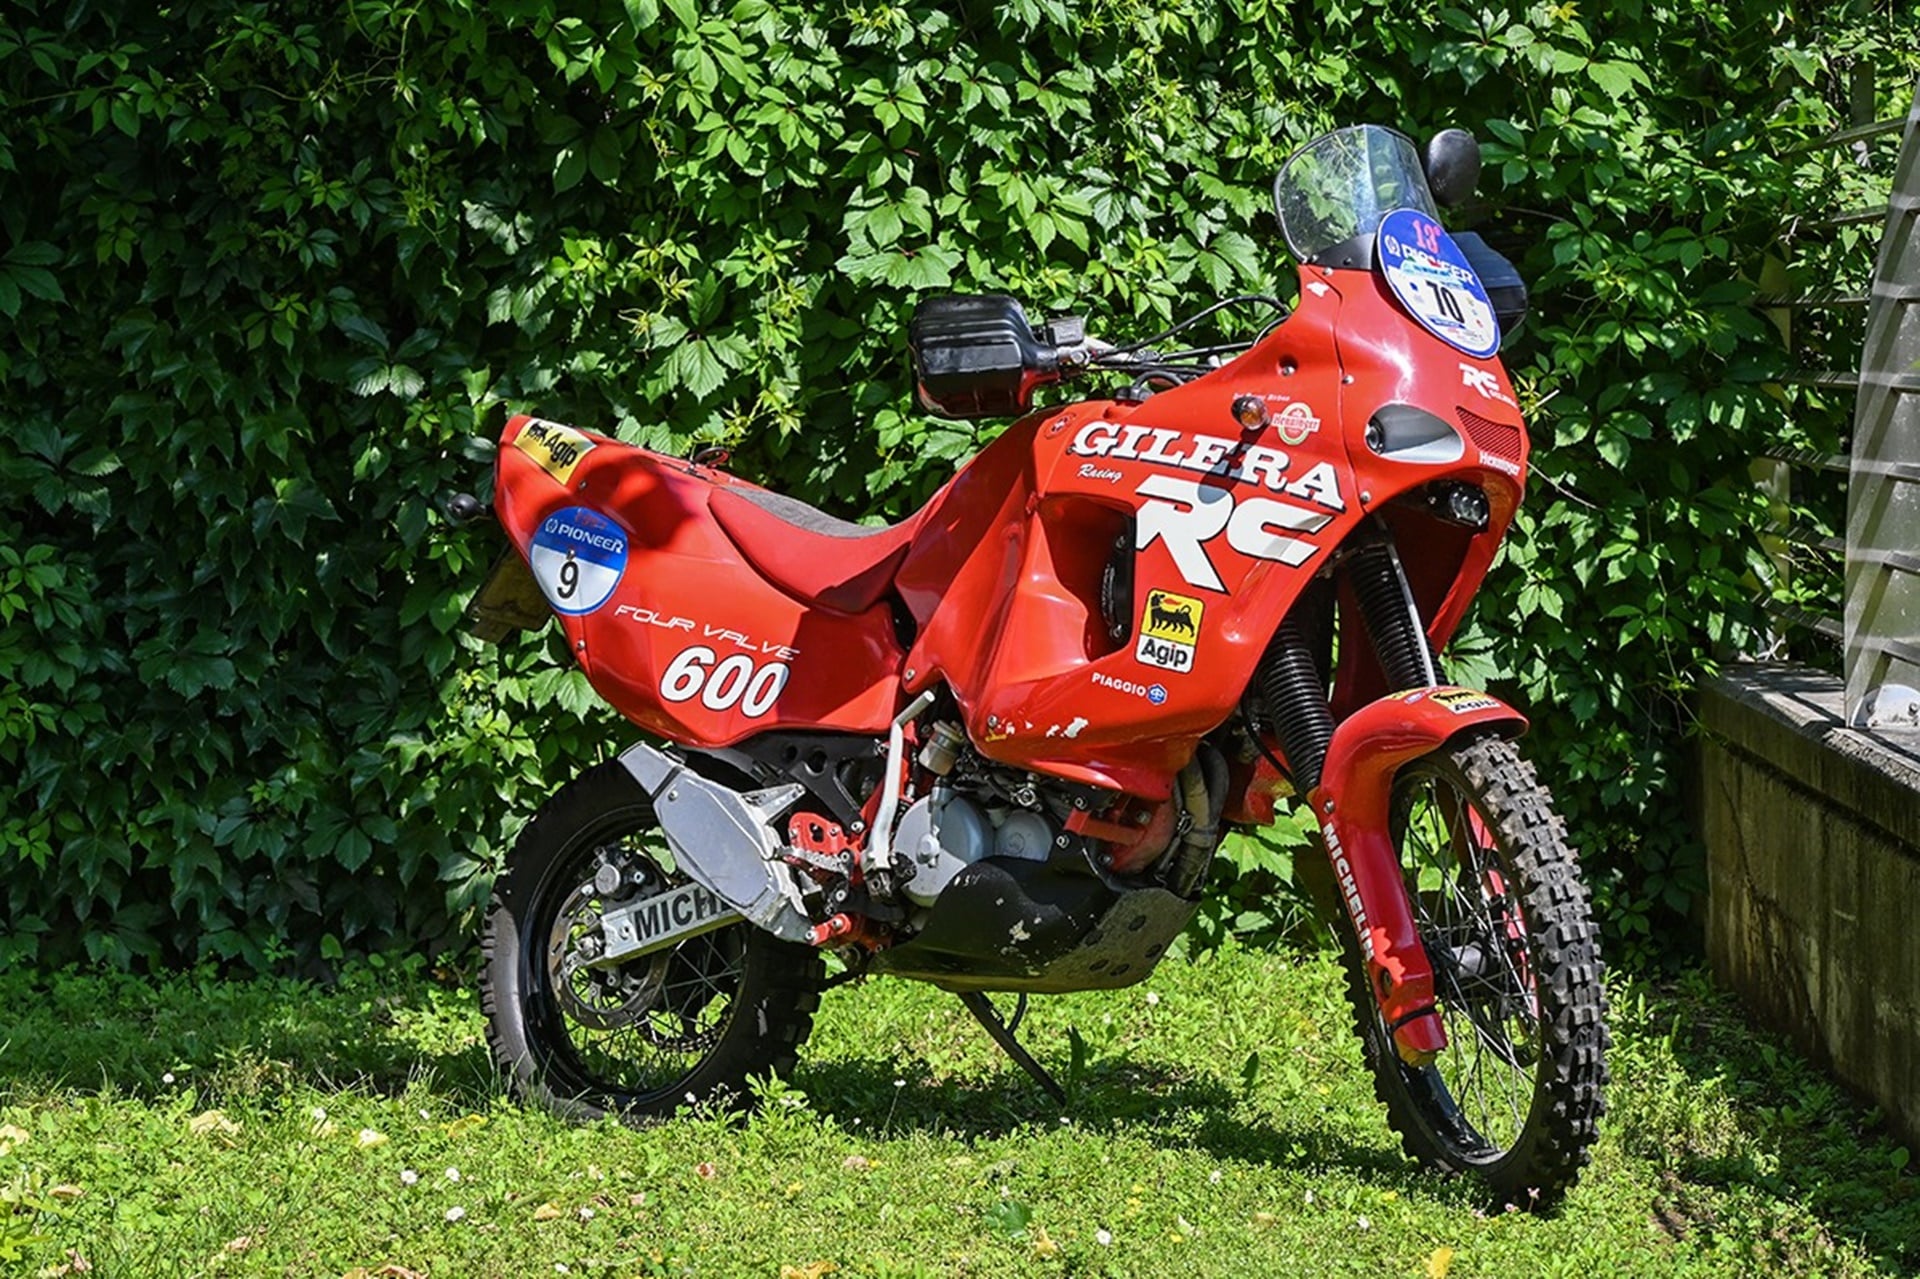 Moto de ensueño a la venta: Gilera RC 600 réplica Dakar de 1992